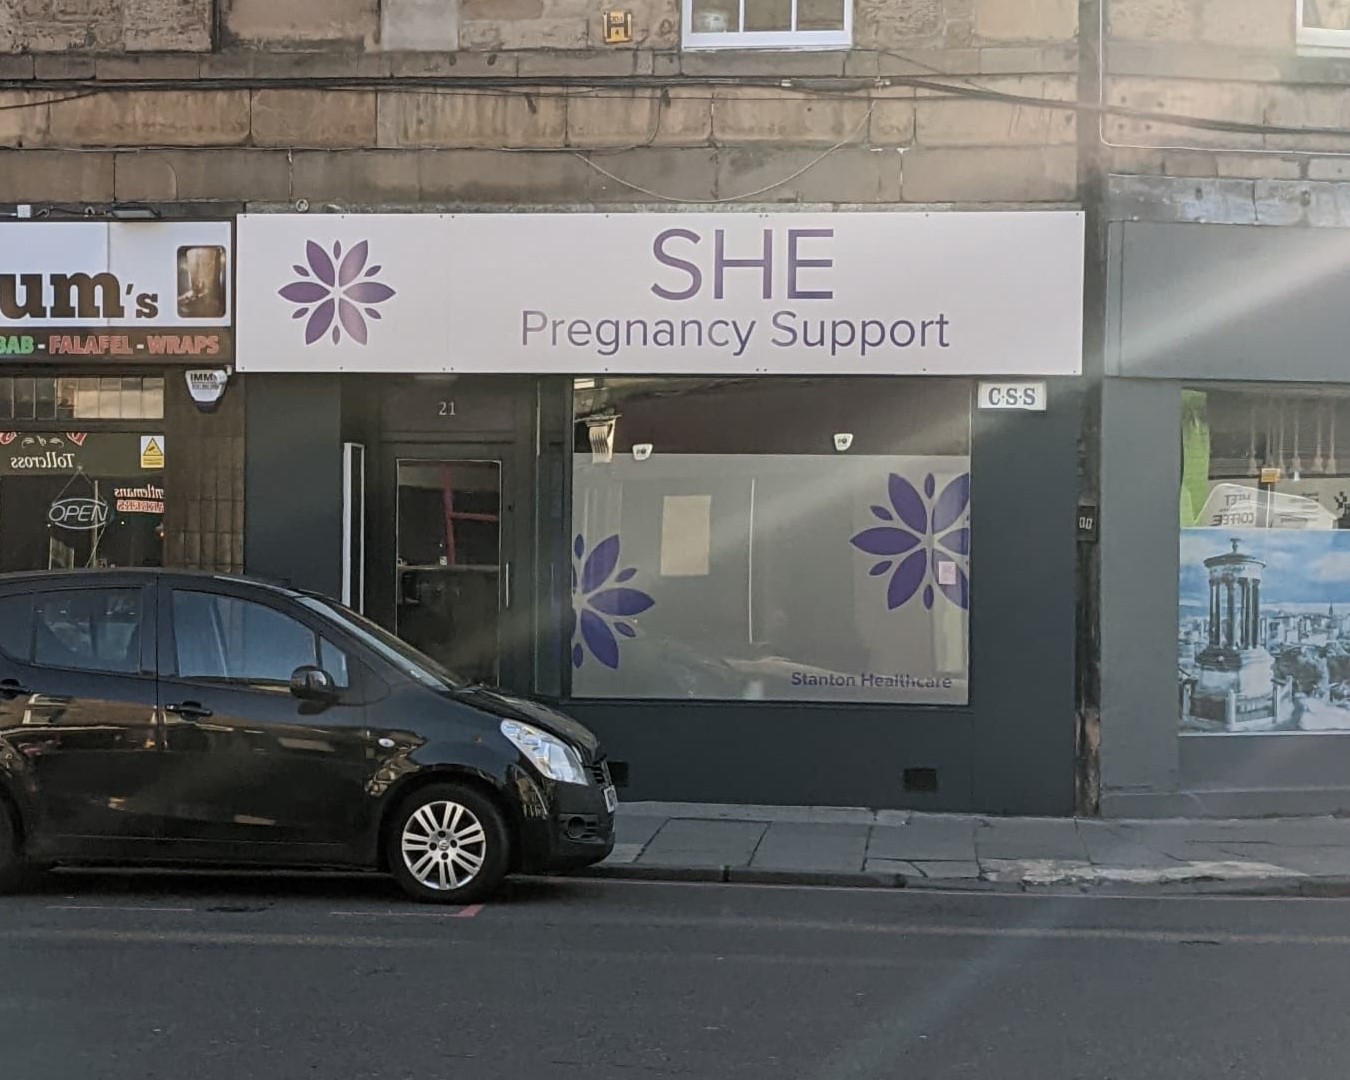 A pregnancy centre in a storefront location in Edinburgh.